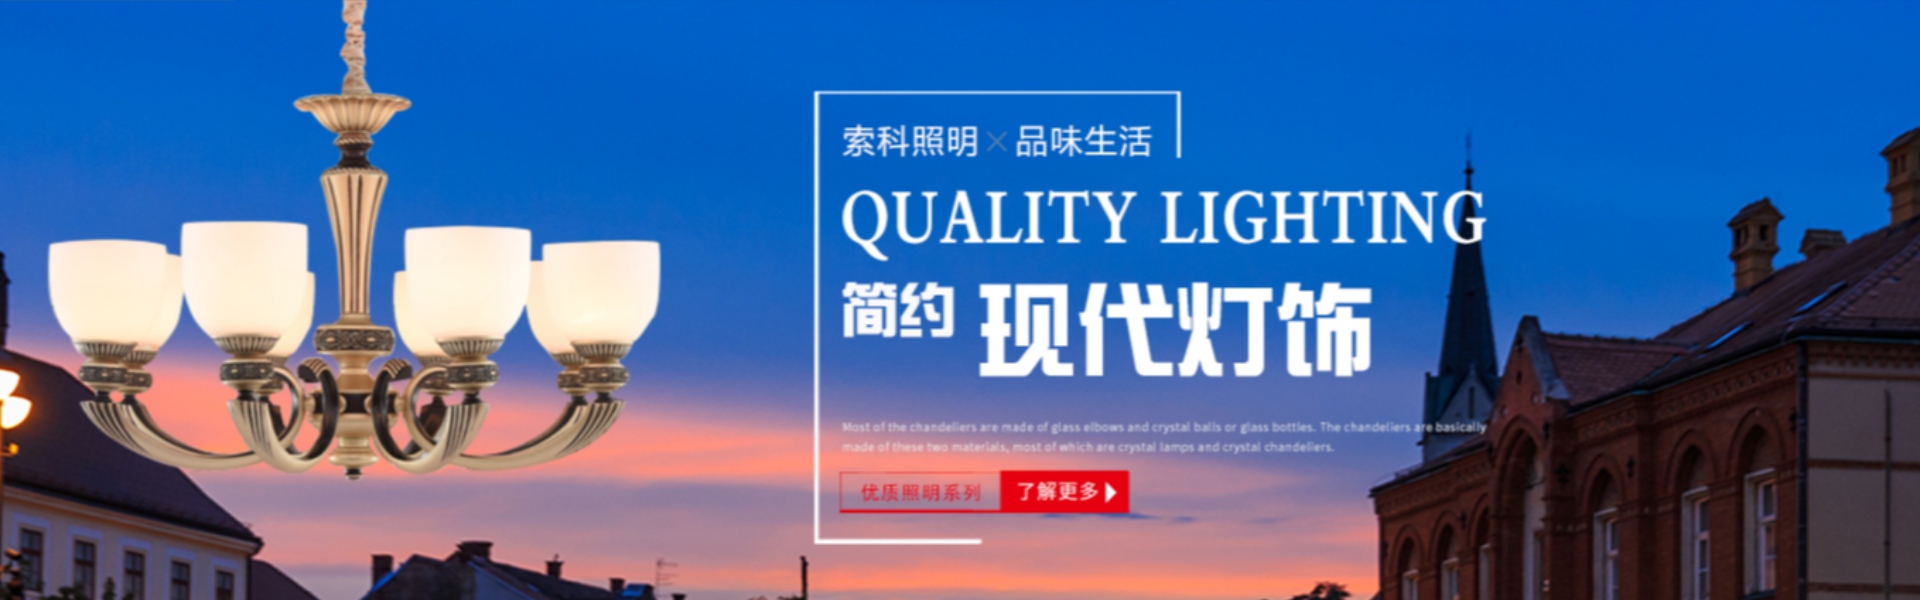 soilsiú tí, soilsiú lasmuigh, soilsiú gréine,Zhongshan Suoke Lighting Electric Co., Ltd.